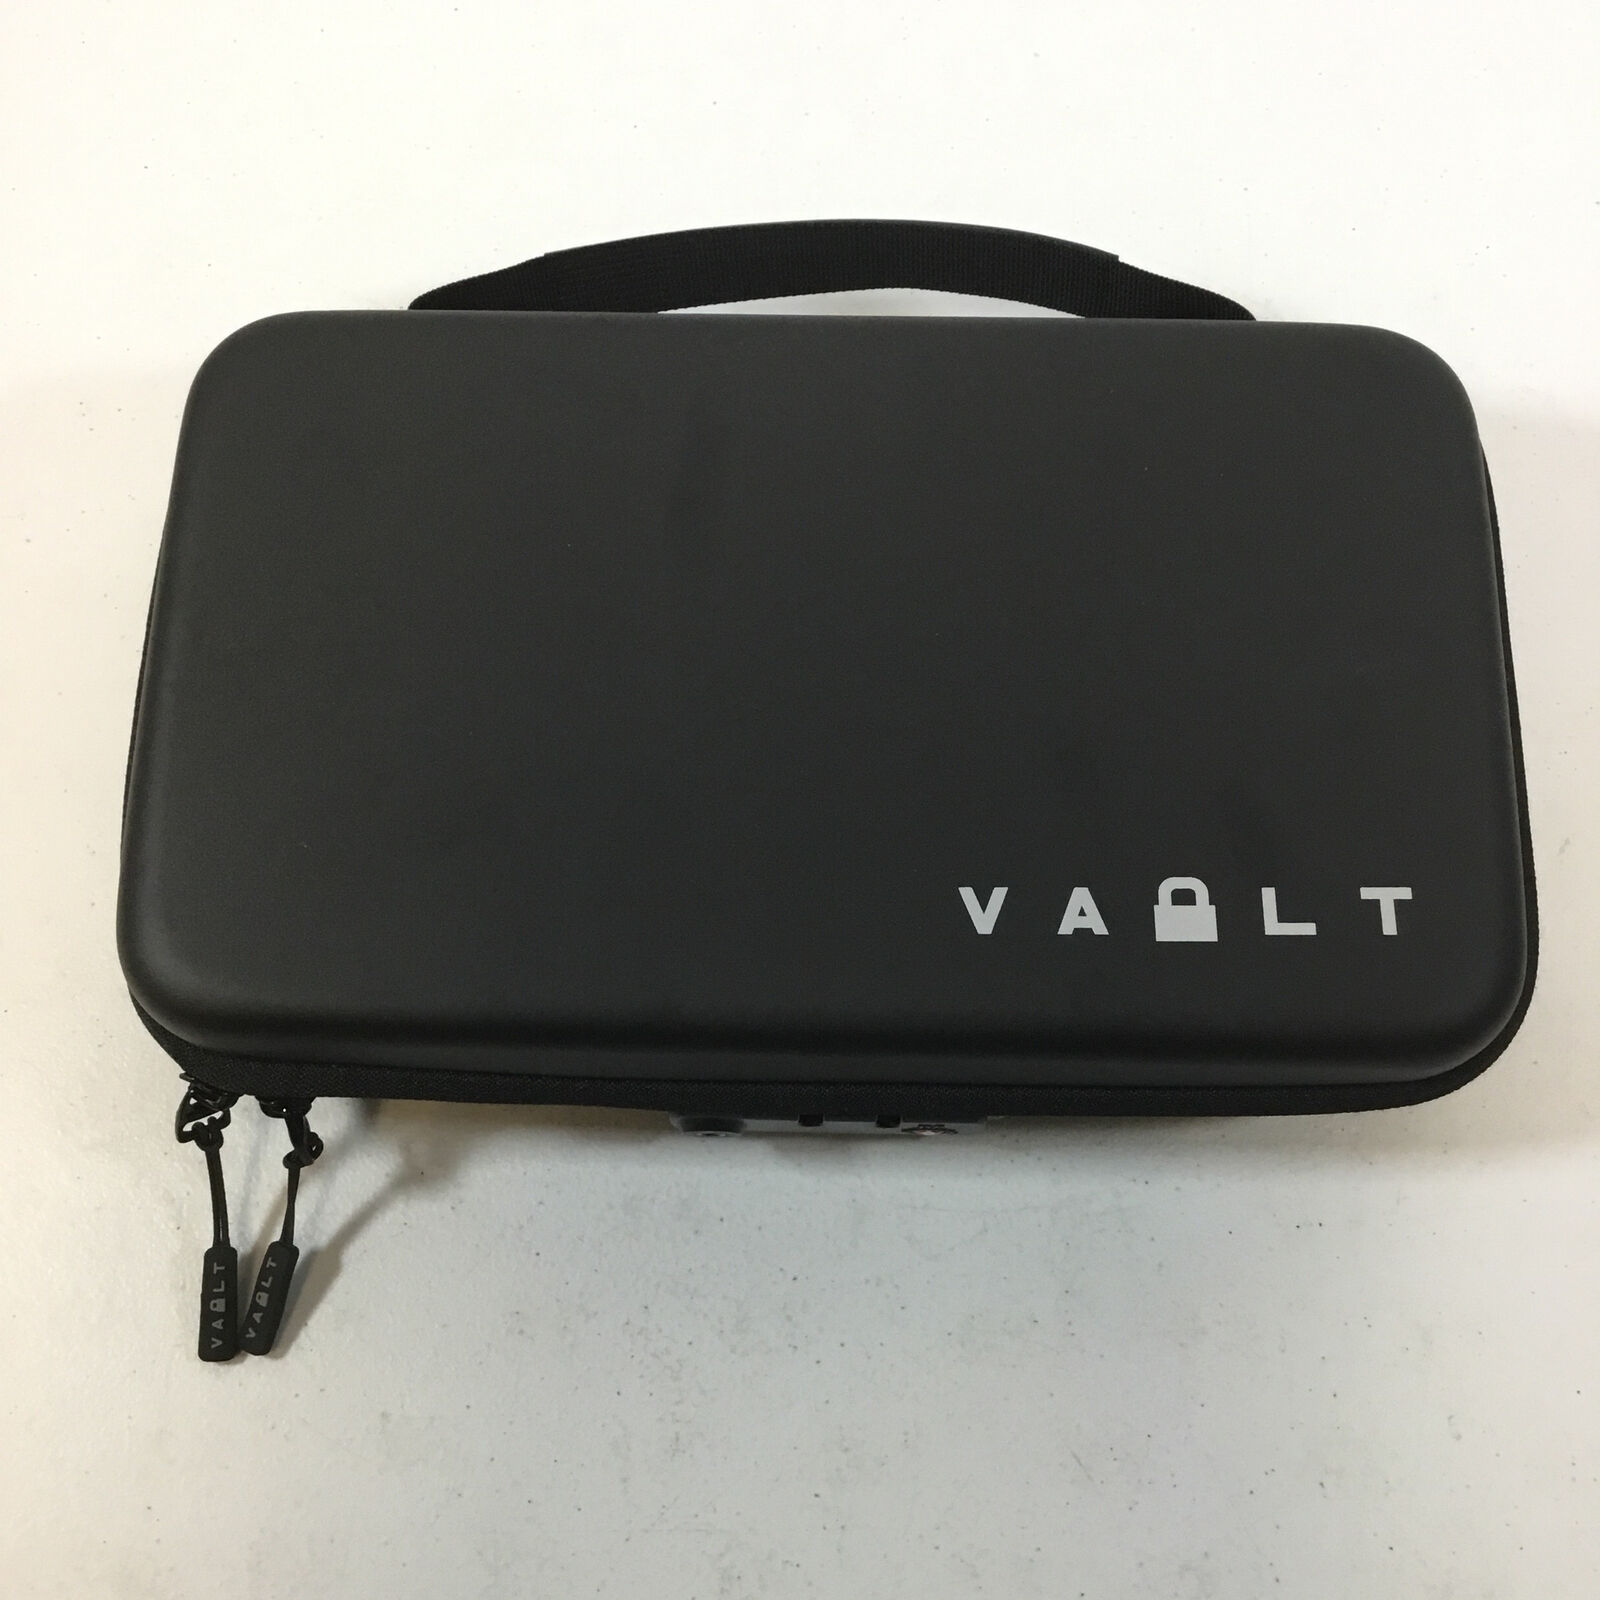 Vault Black Portable Cosmetics Travel Organizer Combination Case Lock Used